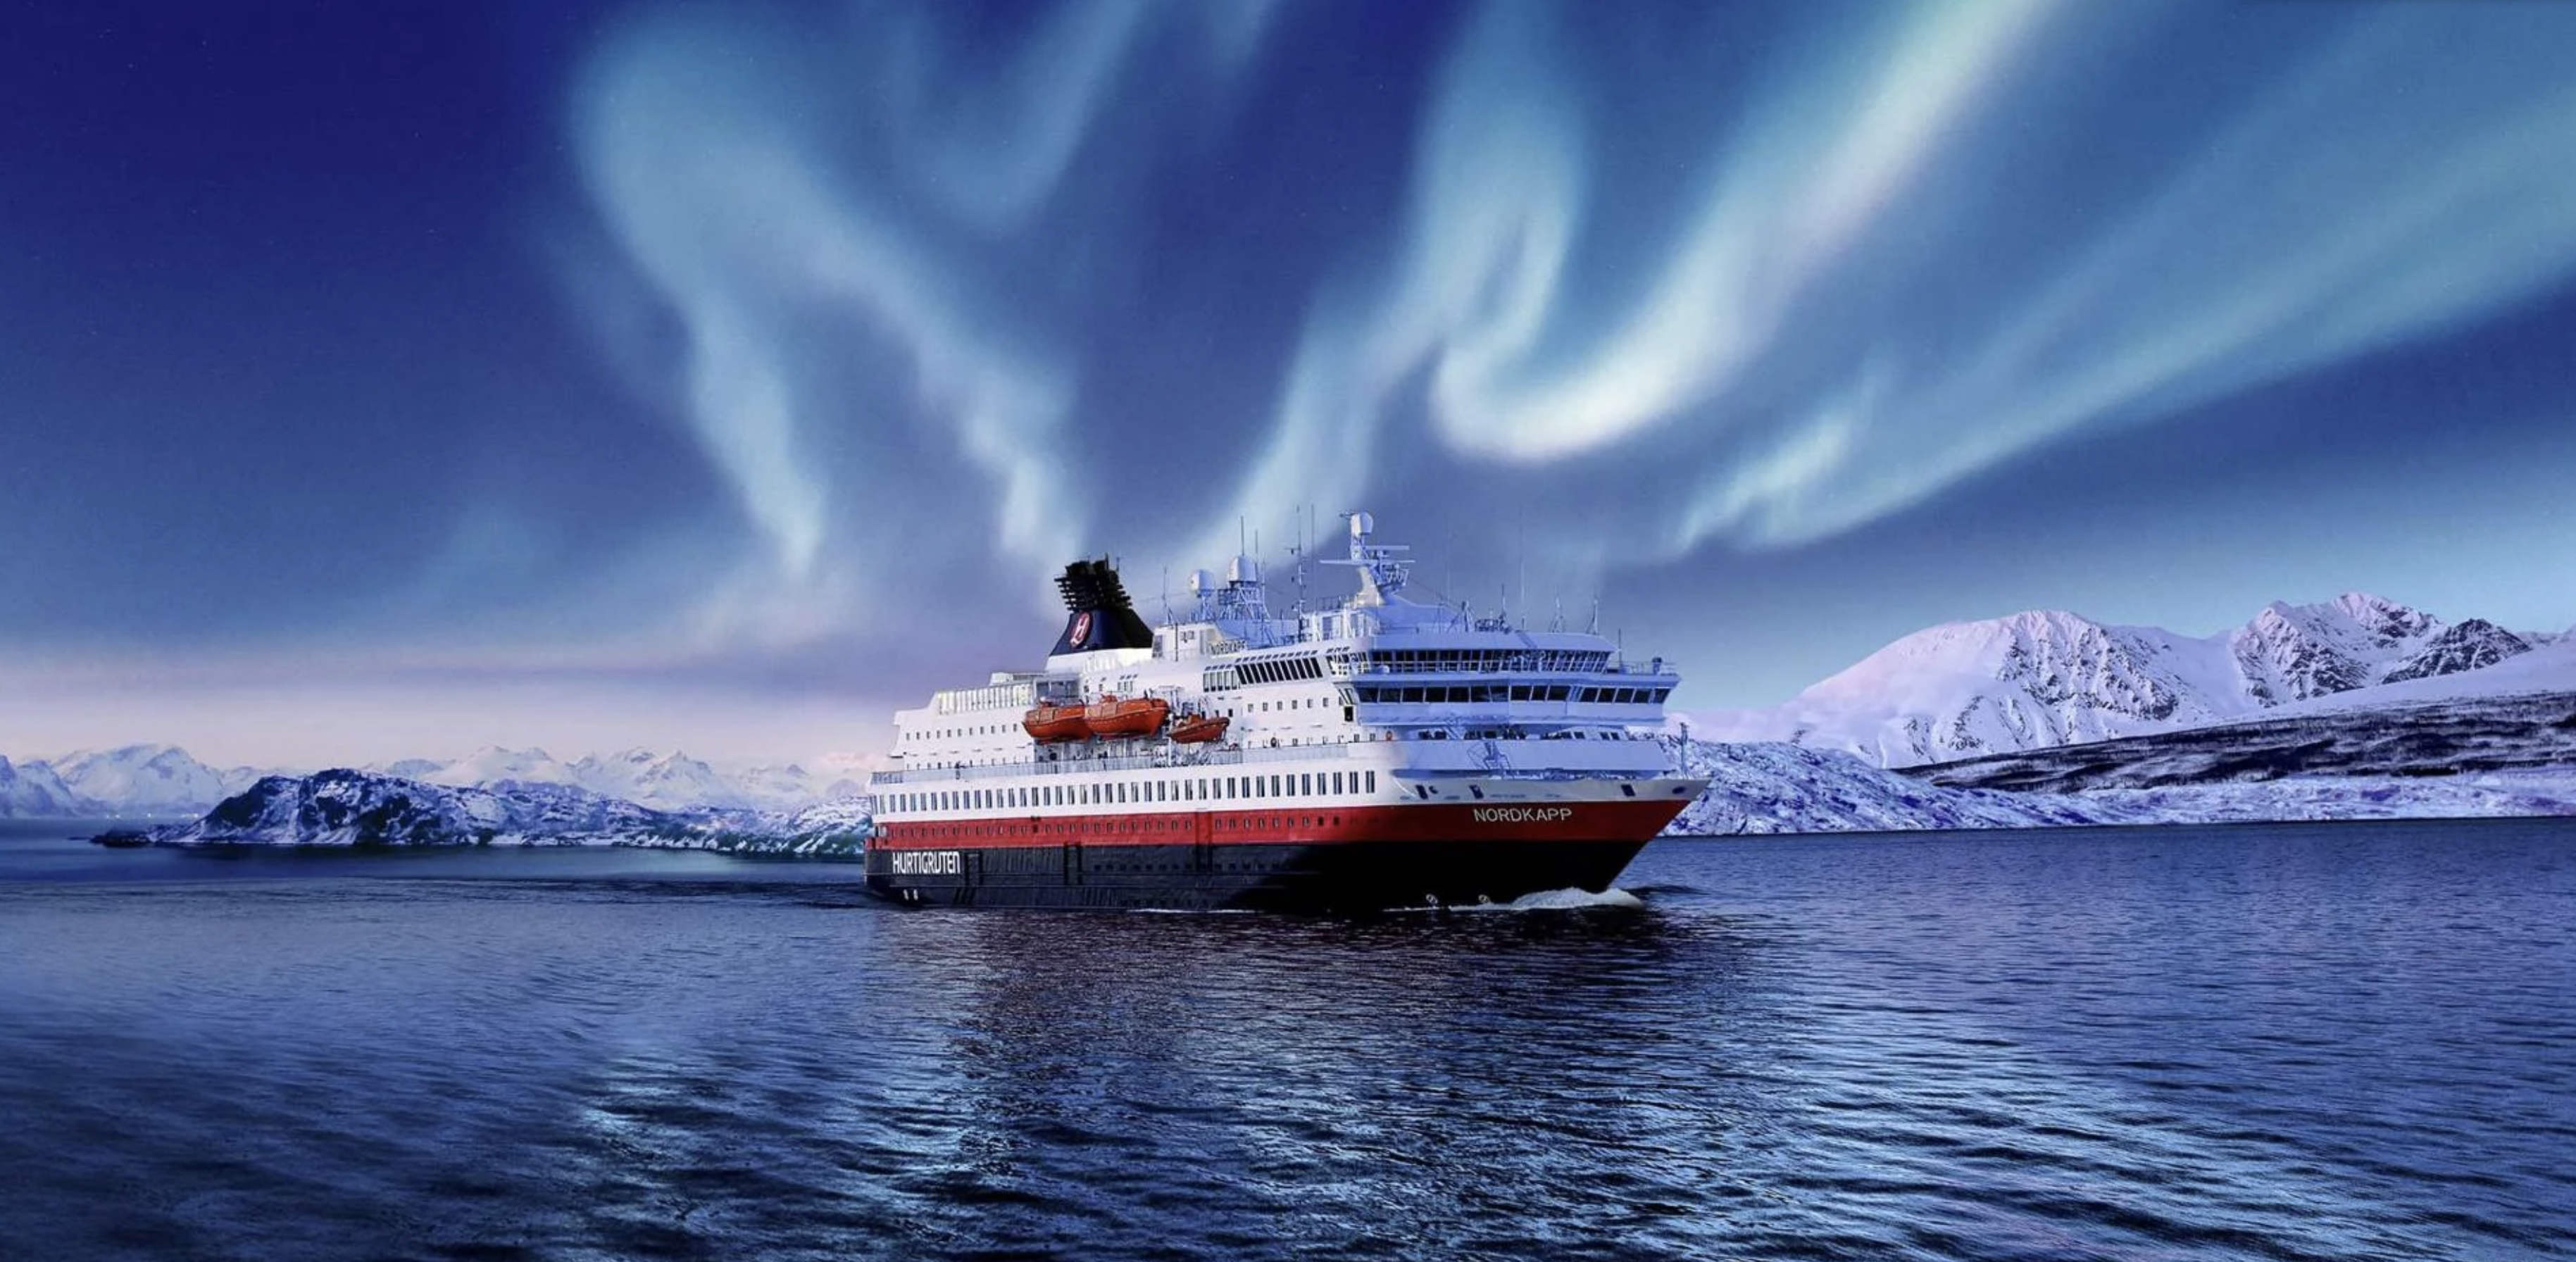 Hurtigruten Norway